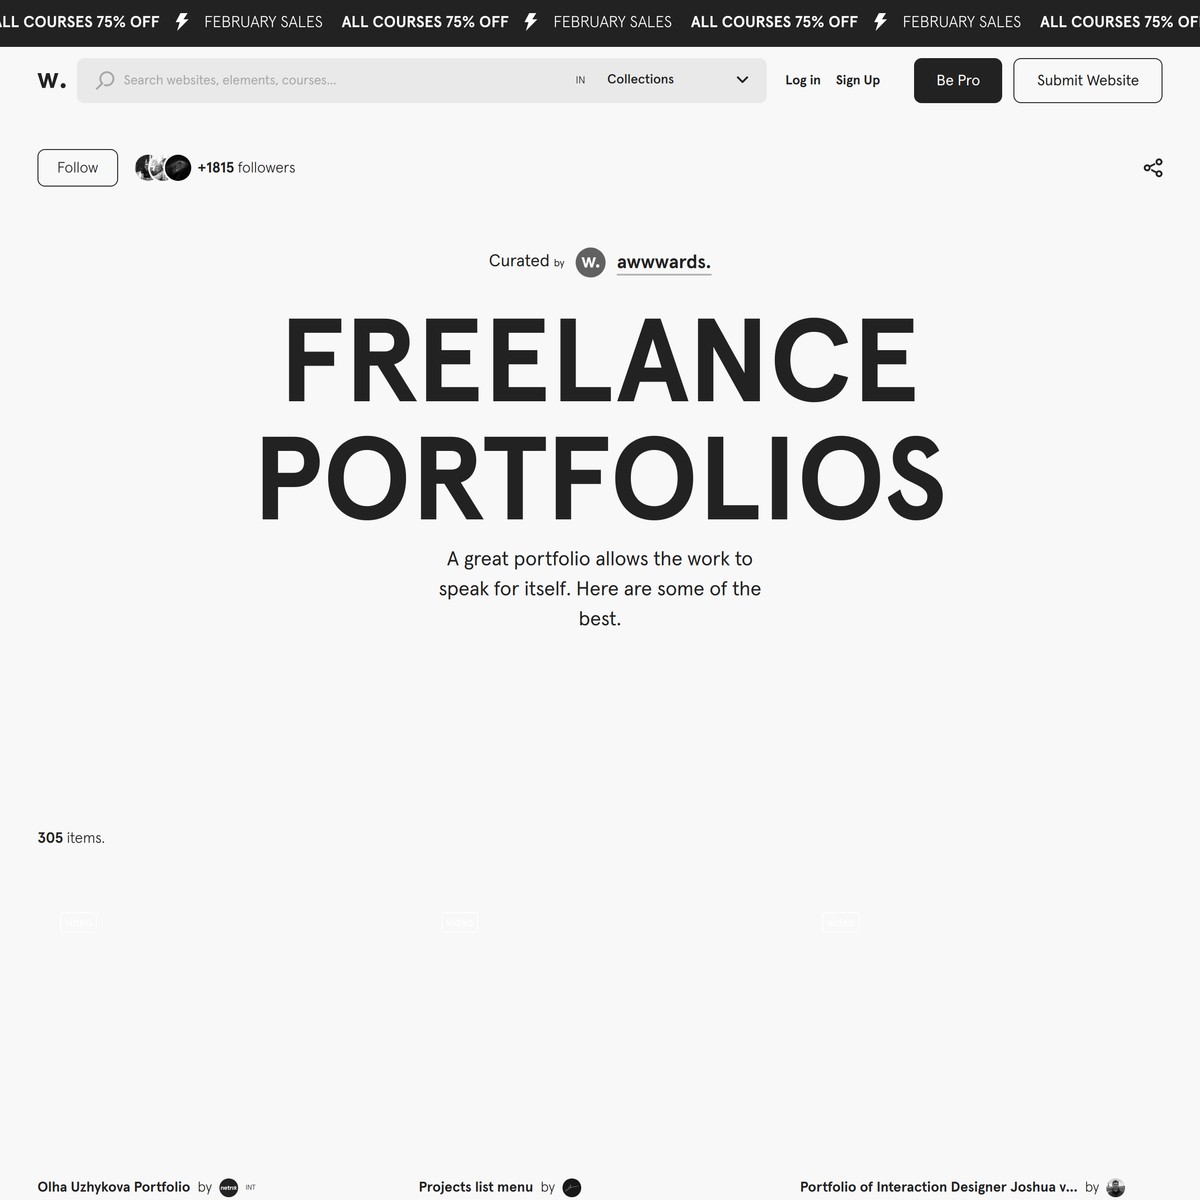 freelance-portfolios-awwwards-are-na